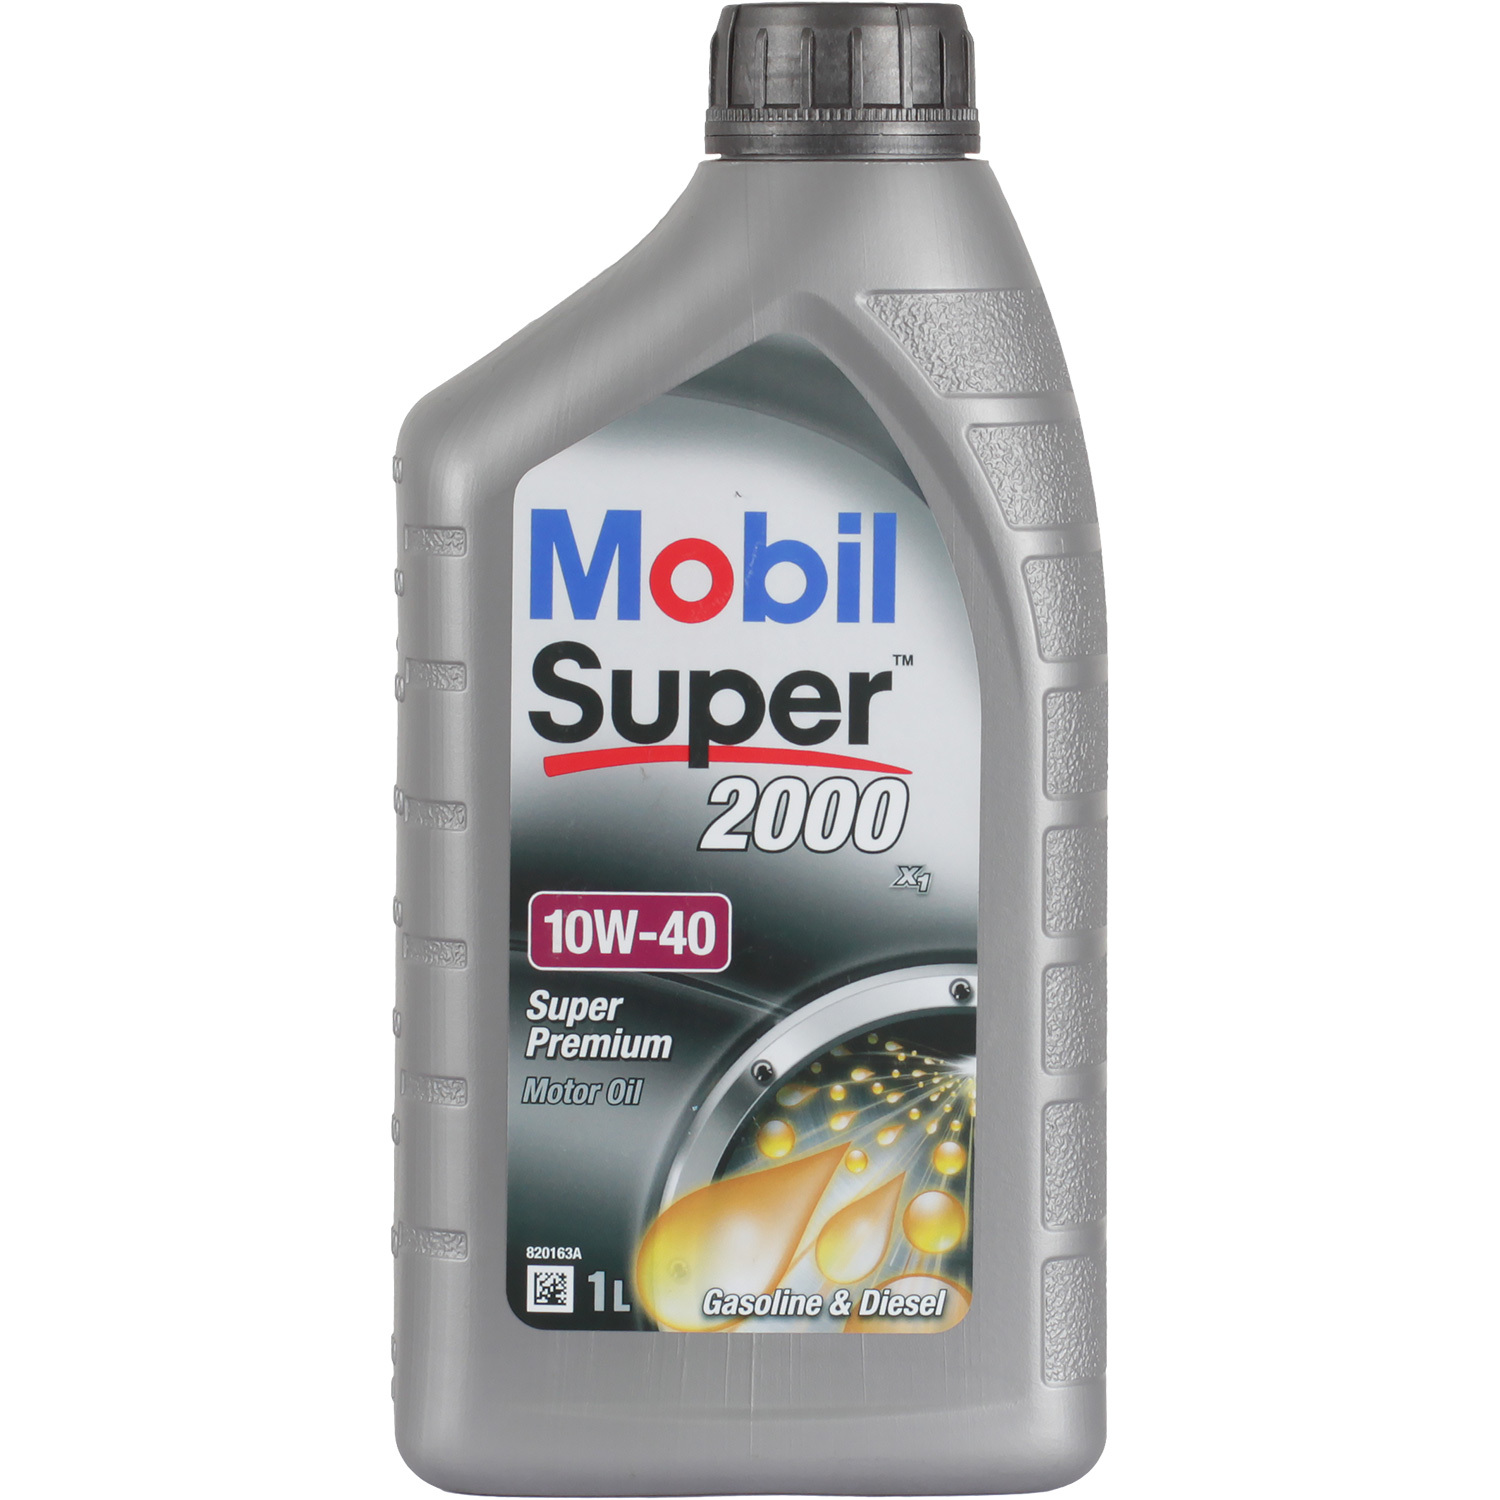 Mobil Моторное масло Mobil Super 2000 X1 10W-40, 1 л моторное масло mobil super 2000 x1 10w 40 4 л